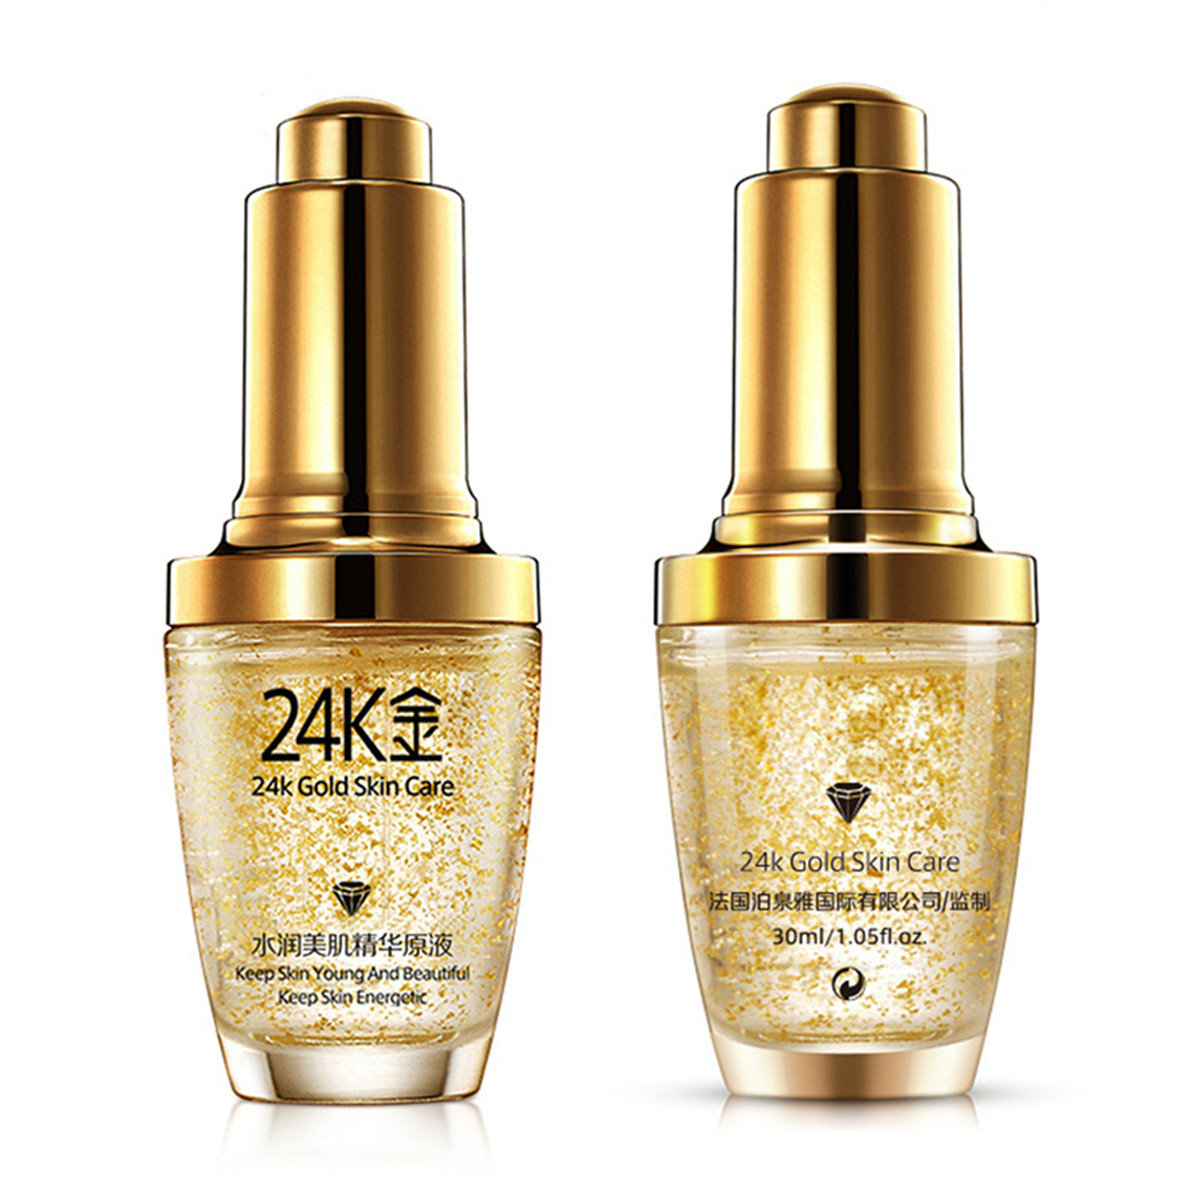 

BIOAQUA 24K Active Gold Face Serum Essence Anti-Aging Anti Wrinkles Moisturizing Skin Care 30ml